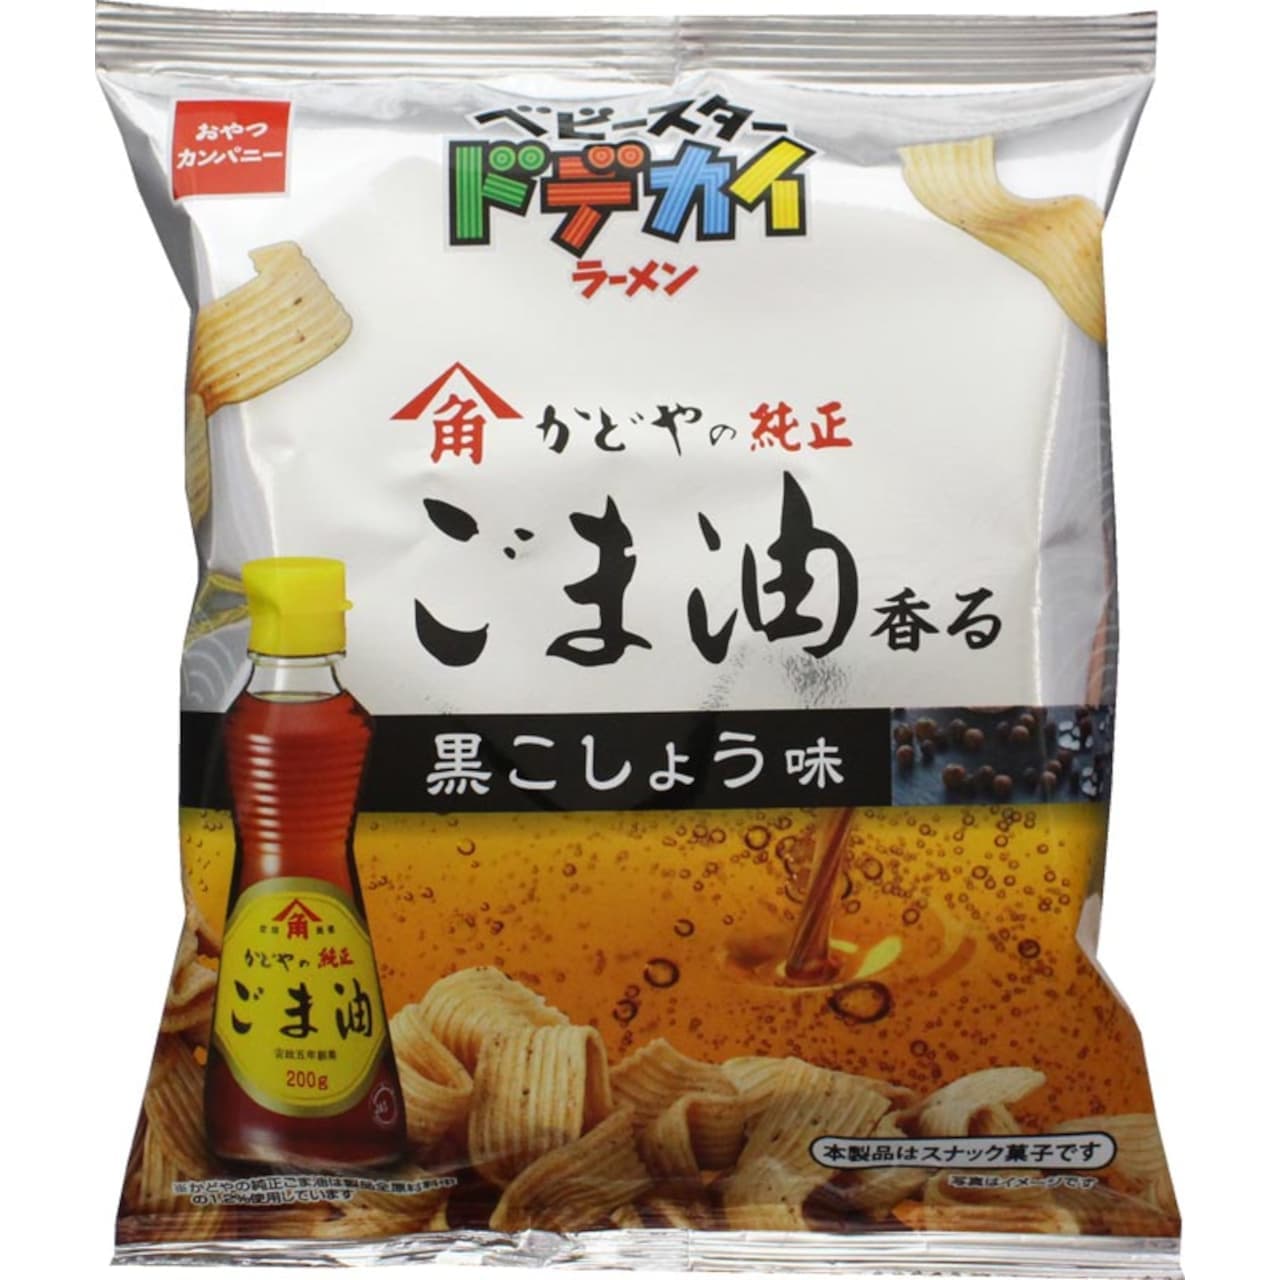 Oyazuka Company "Baby Star Dodekai Ramen (Kadoya's Genuine Sesame Oil Scented Nori-shio Flavor/Kadoya's Genuine Sesame Oil Scented Black Pepper Flavor)